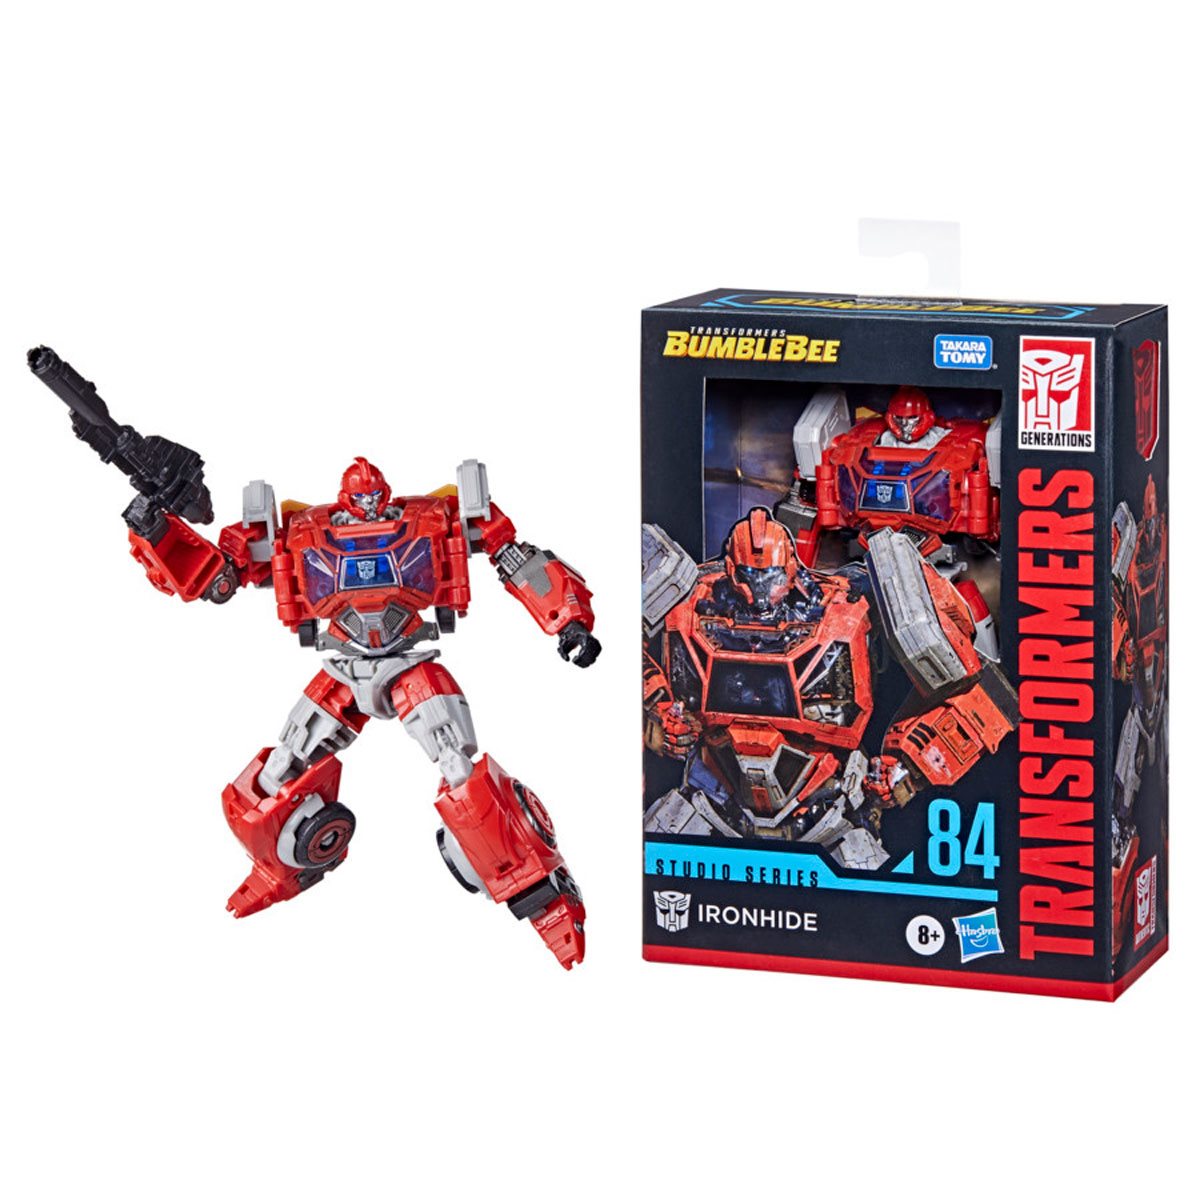 Mini Transformer Figures Toys Optimus Prime Ironhide Bumble Bee Robots For Kids& 